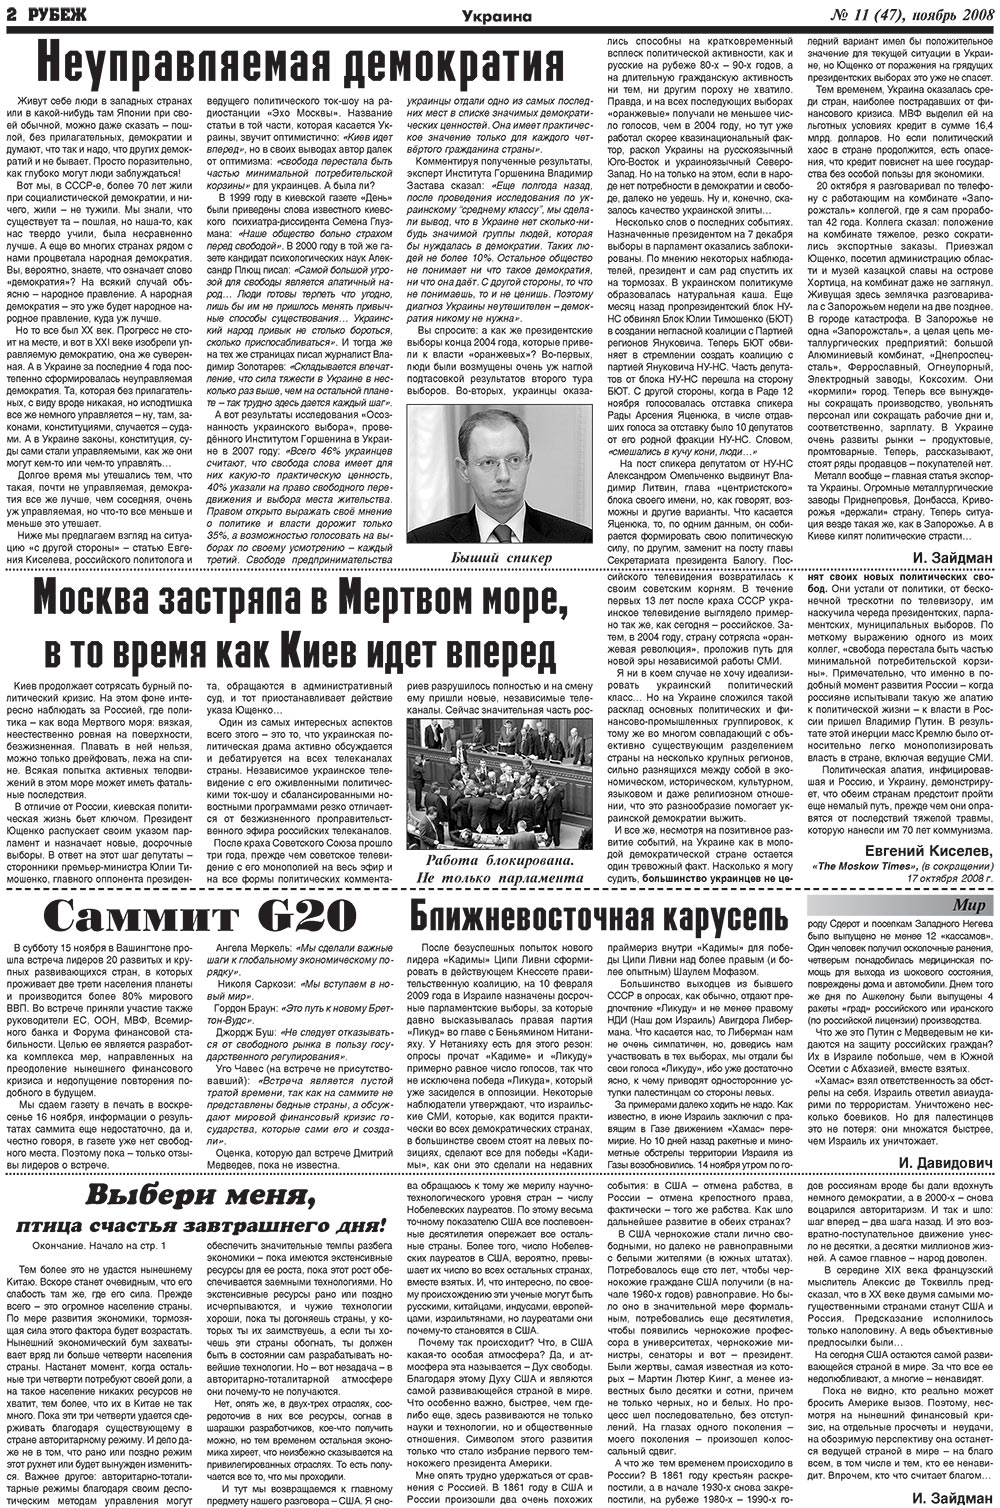 Рубеж, газета. 2008 №11 стр.2